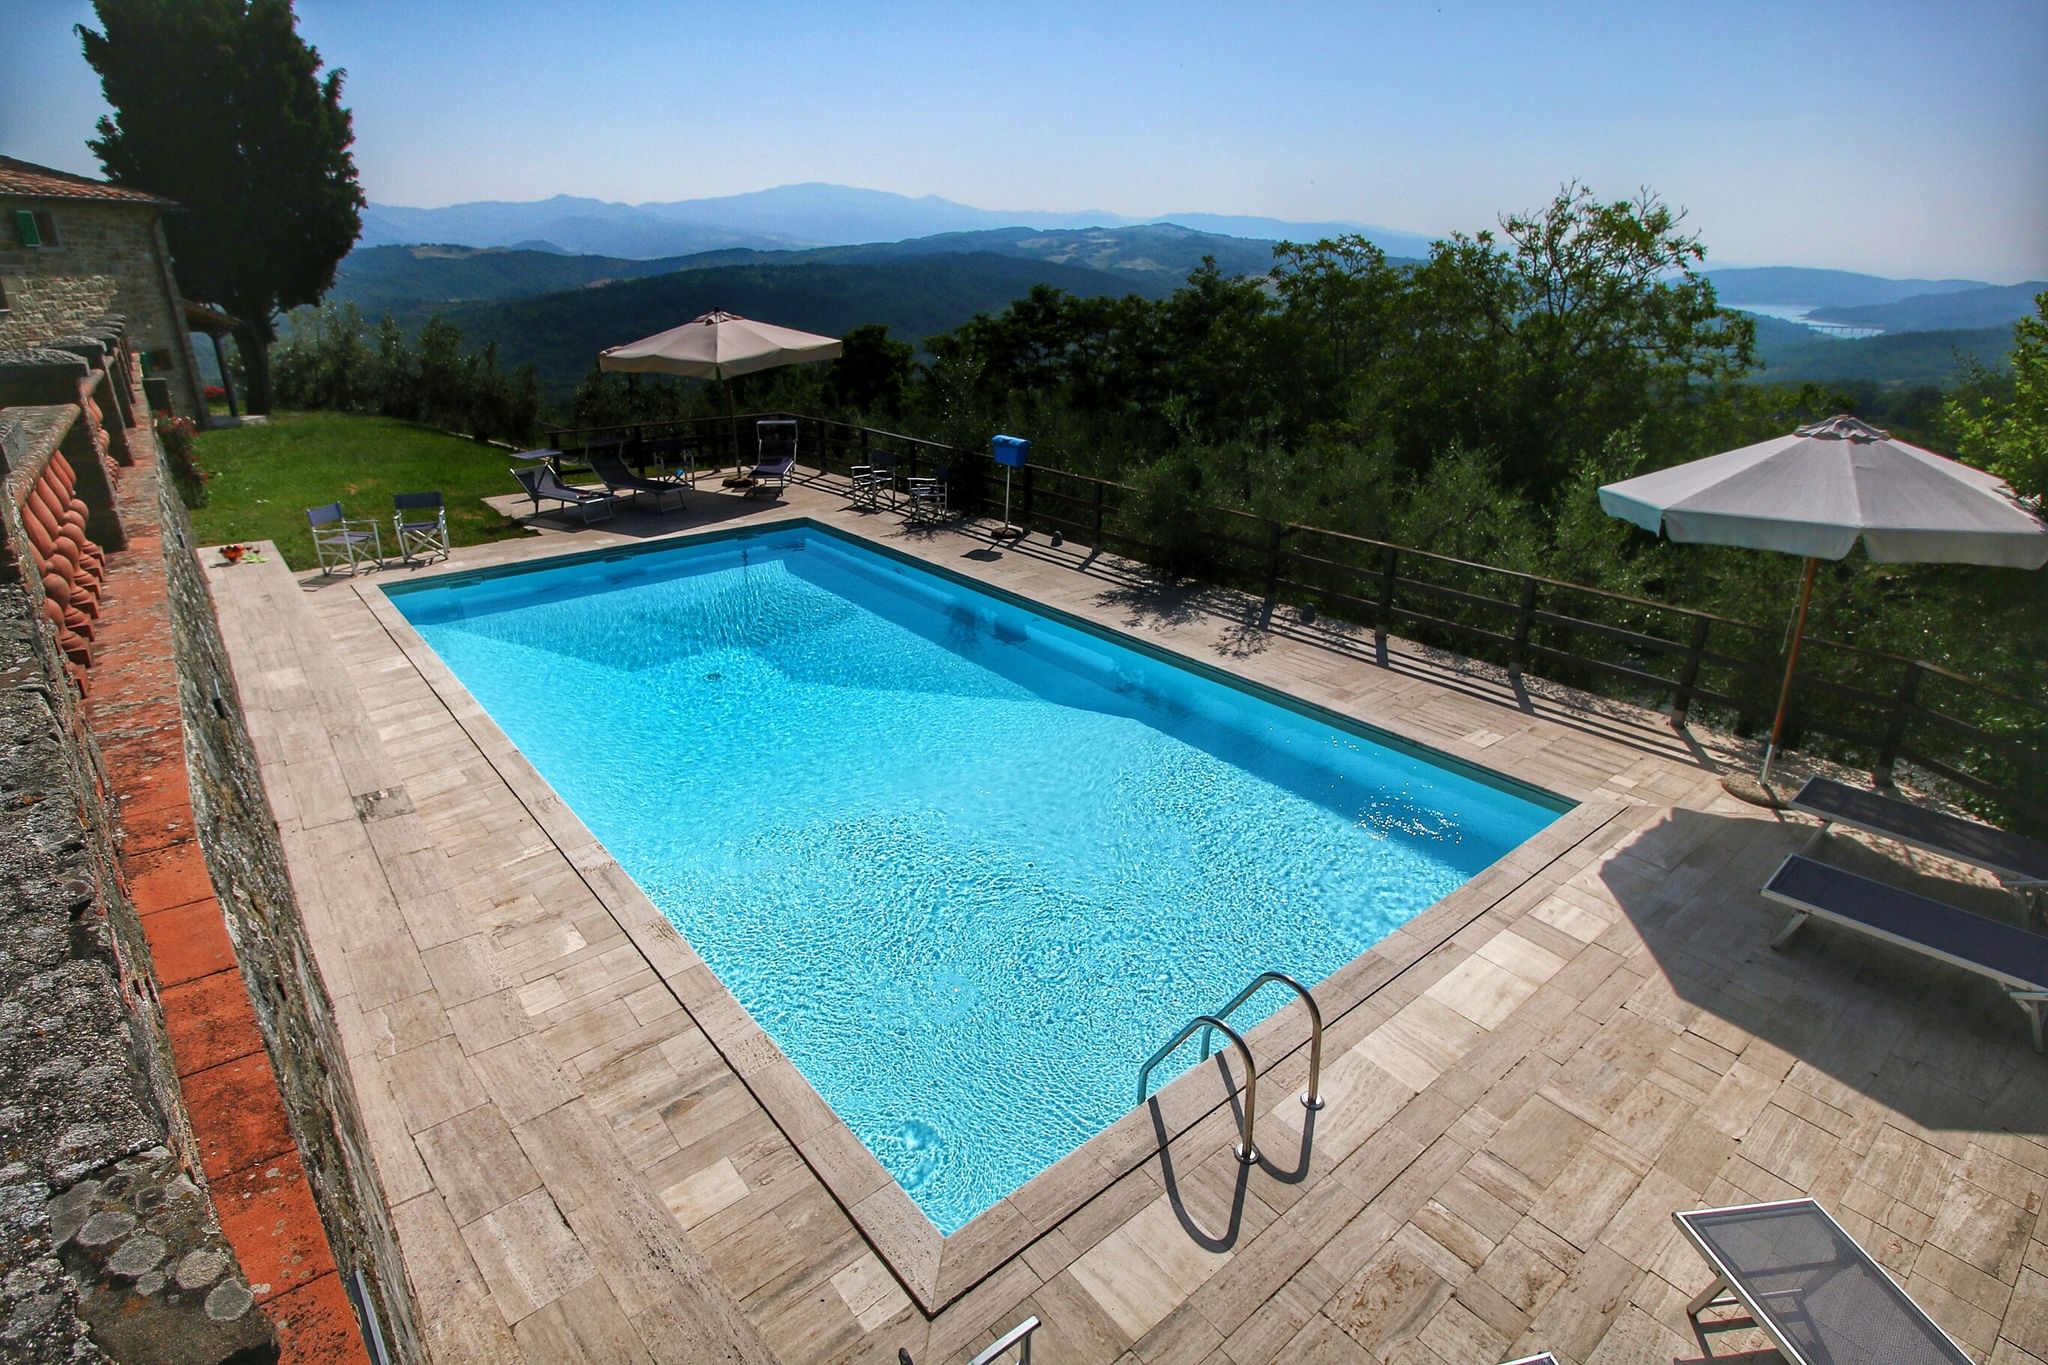 Panoramic stone apartment with swimming pool